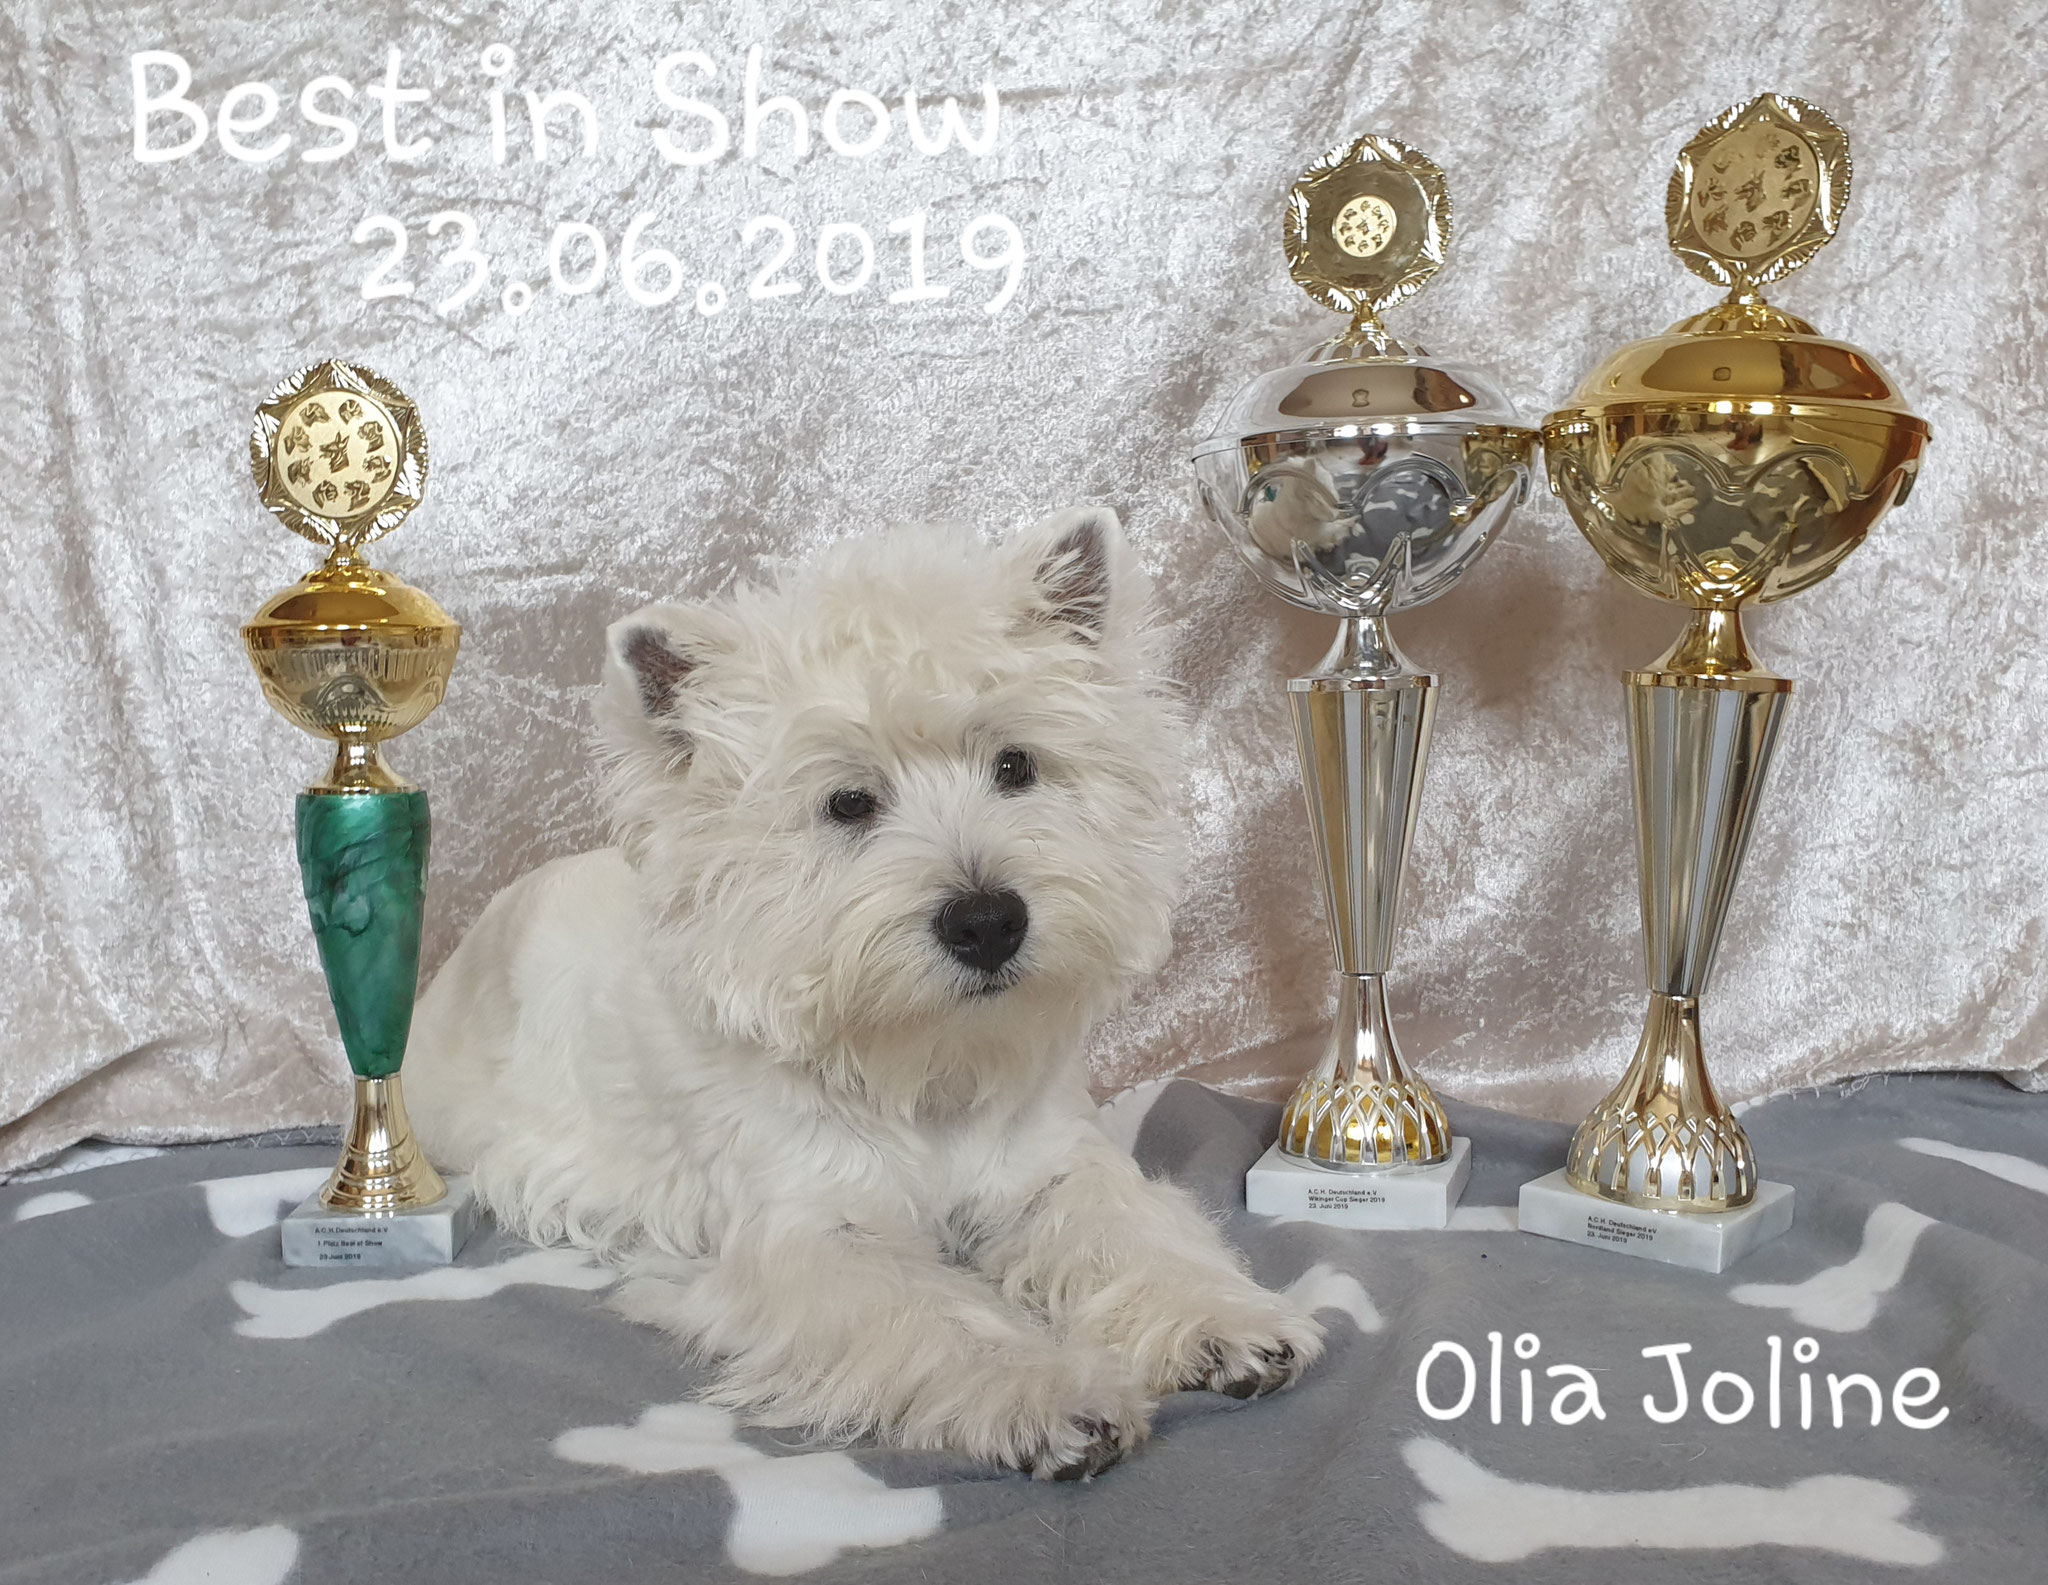 Olia Joline "Best in Show" 06/2019